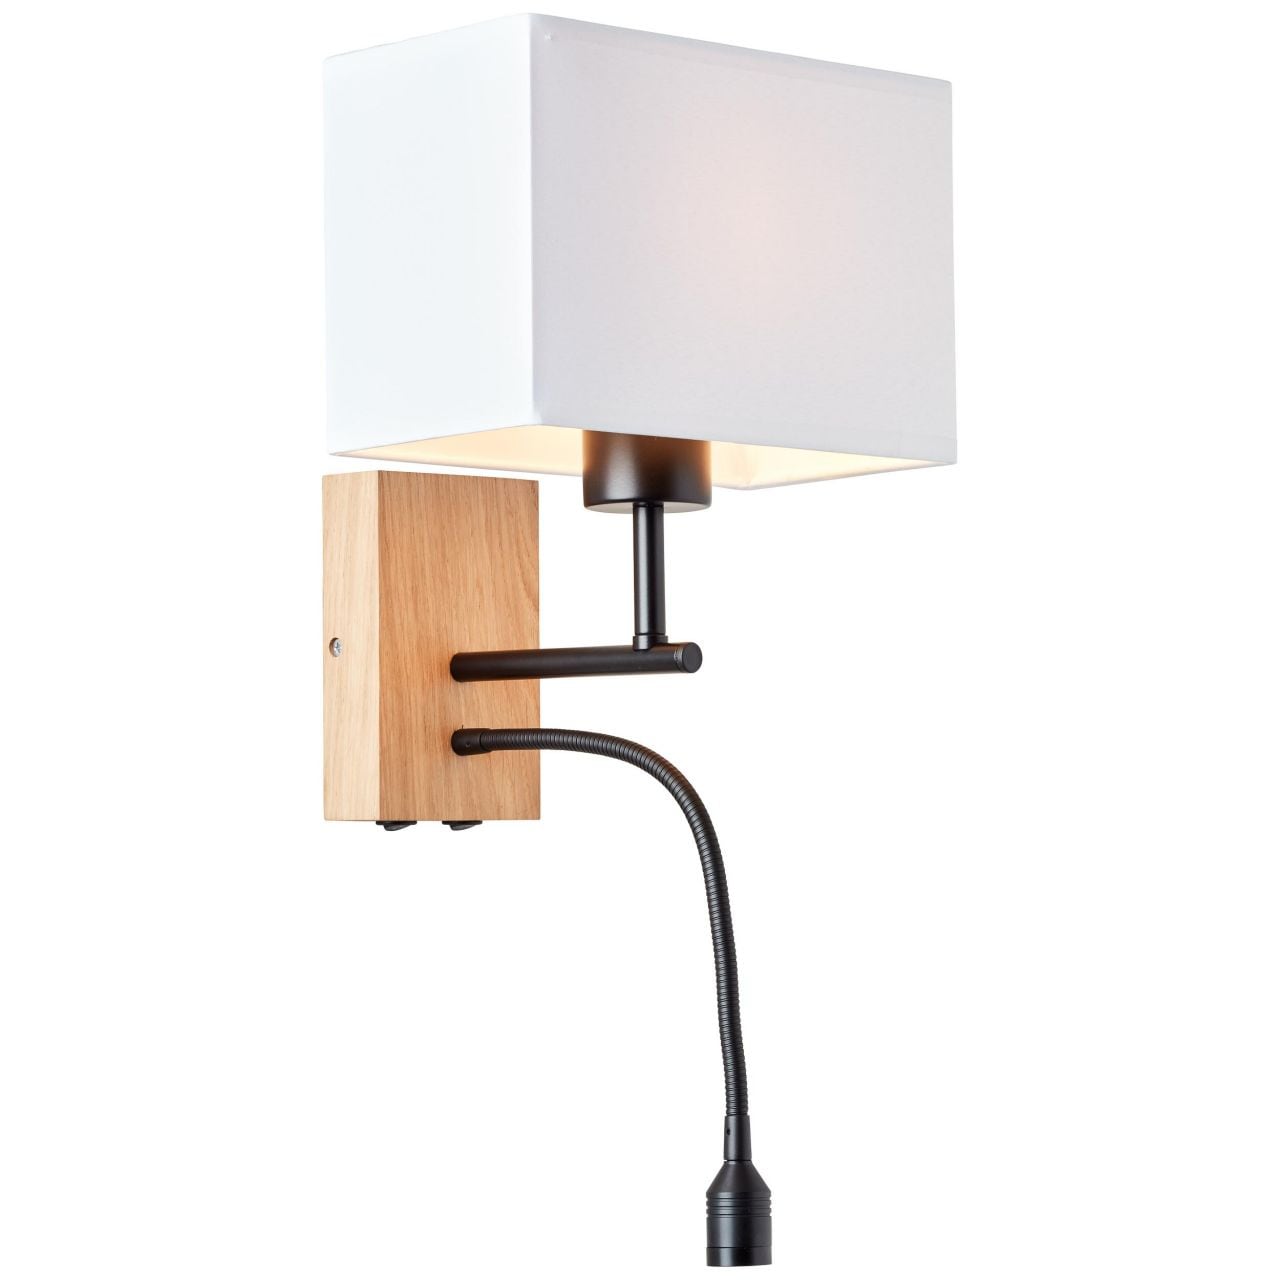 BRILLIANT Lampe, Rayan LED Wandleuchte mit Lesearm eiche geölt/weiß, 1x A60, E27, 25W geeignet für Normallampen, Holz au